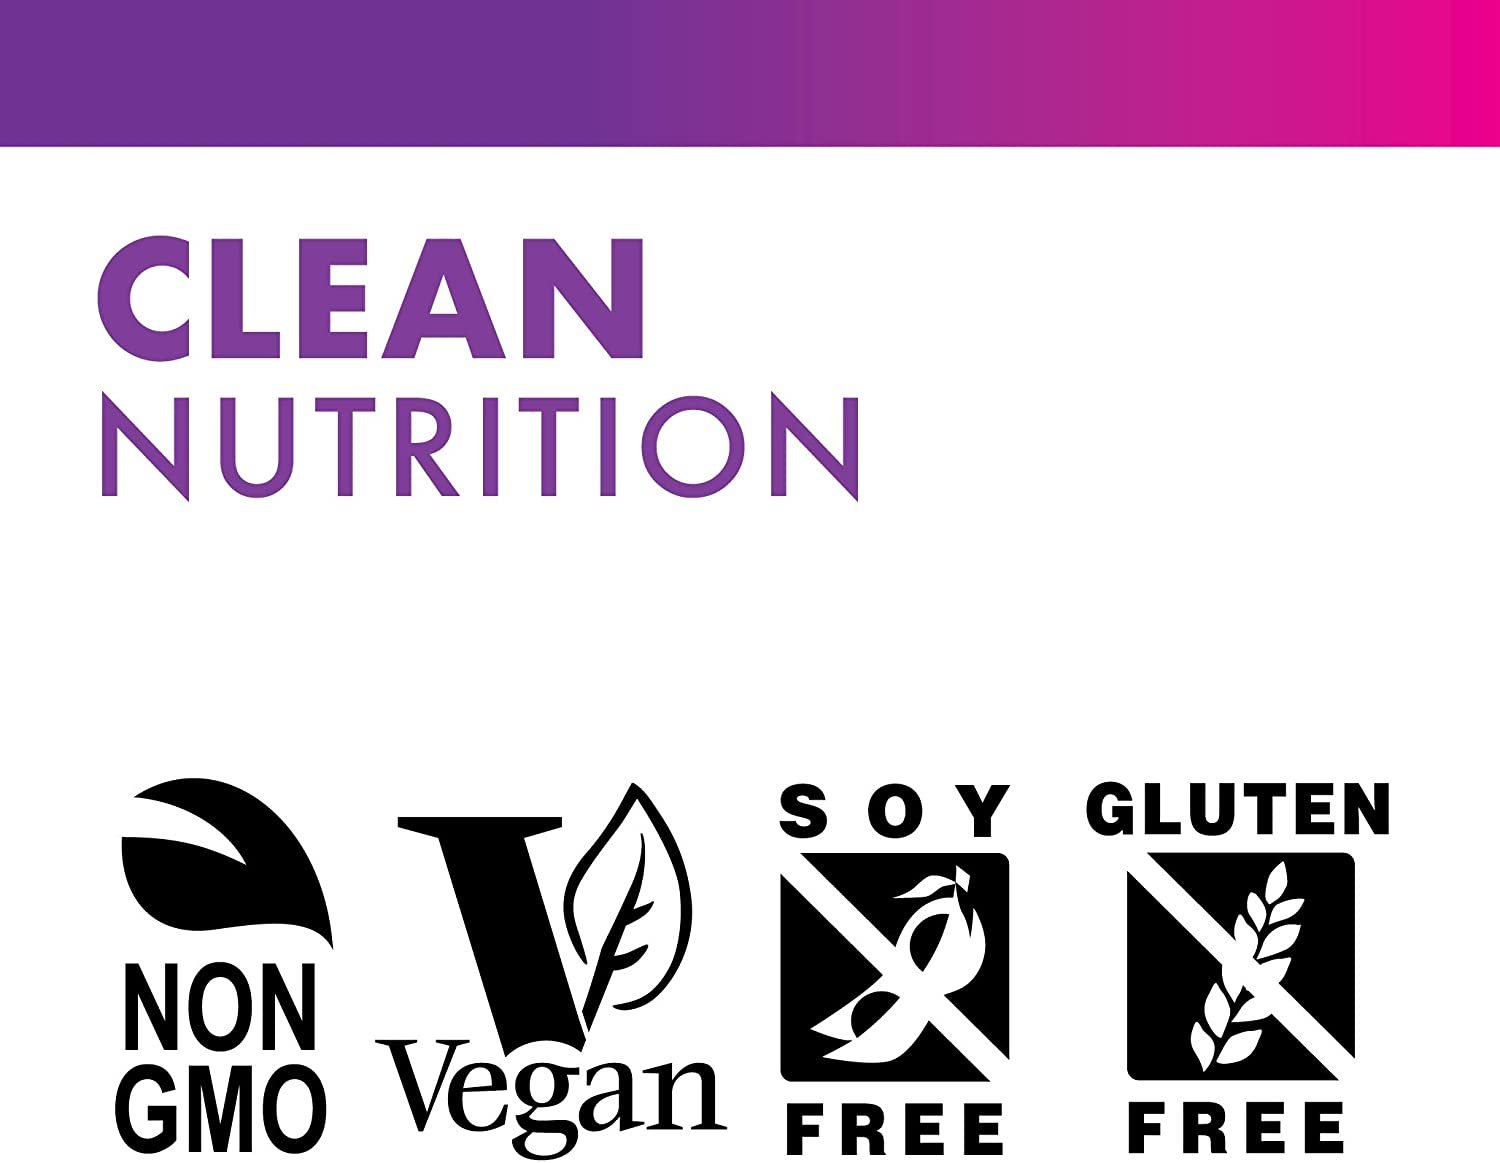 Bluebonnet Nutrition CholesteRice Vegetable Capsules, Red Yeast Rice, Plant Sterols, Pantethine, CoQ10, Policosanol, Vegan, Vegetarian, Non GMO, Gluten Free, Milk Free, SOY-FREE, 60 Vegetable Capsules